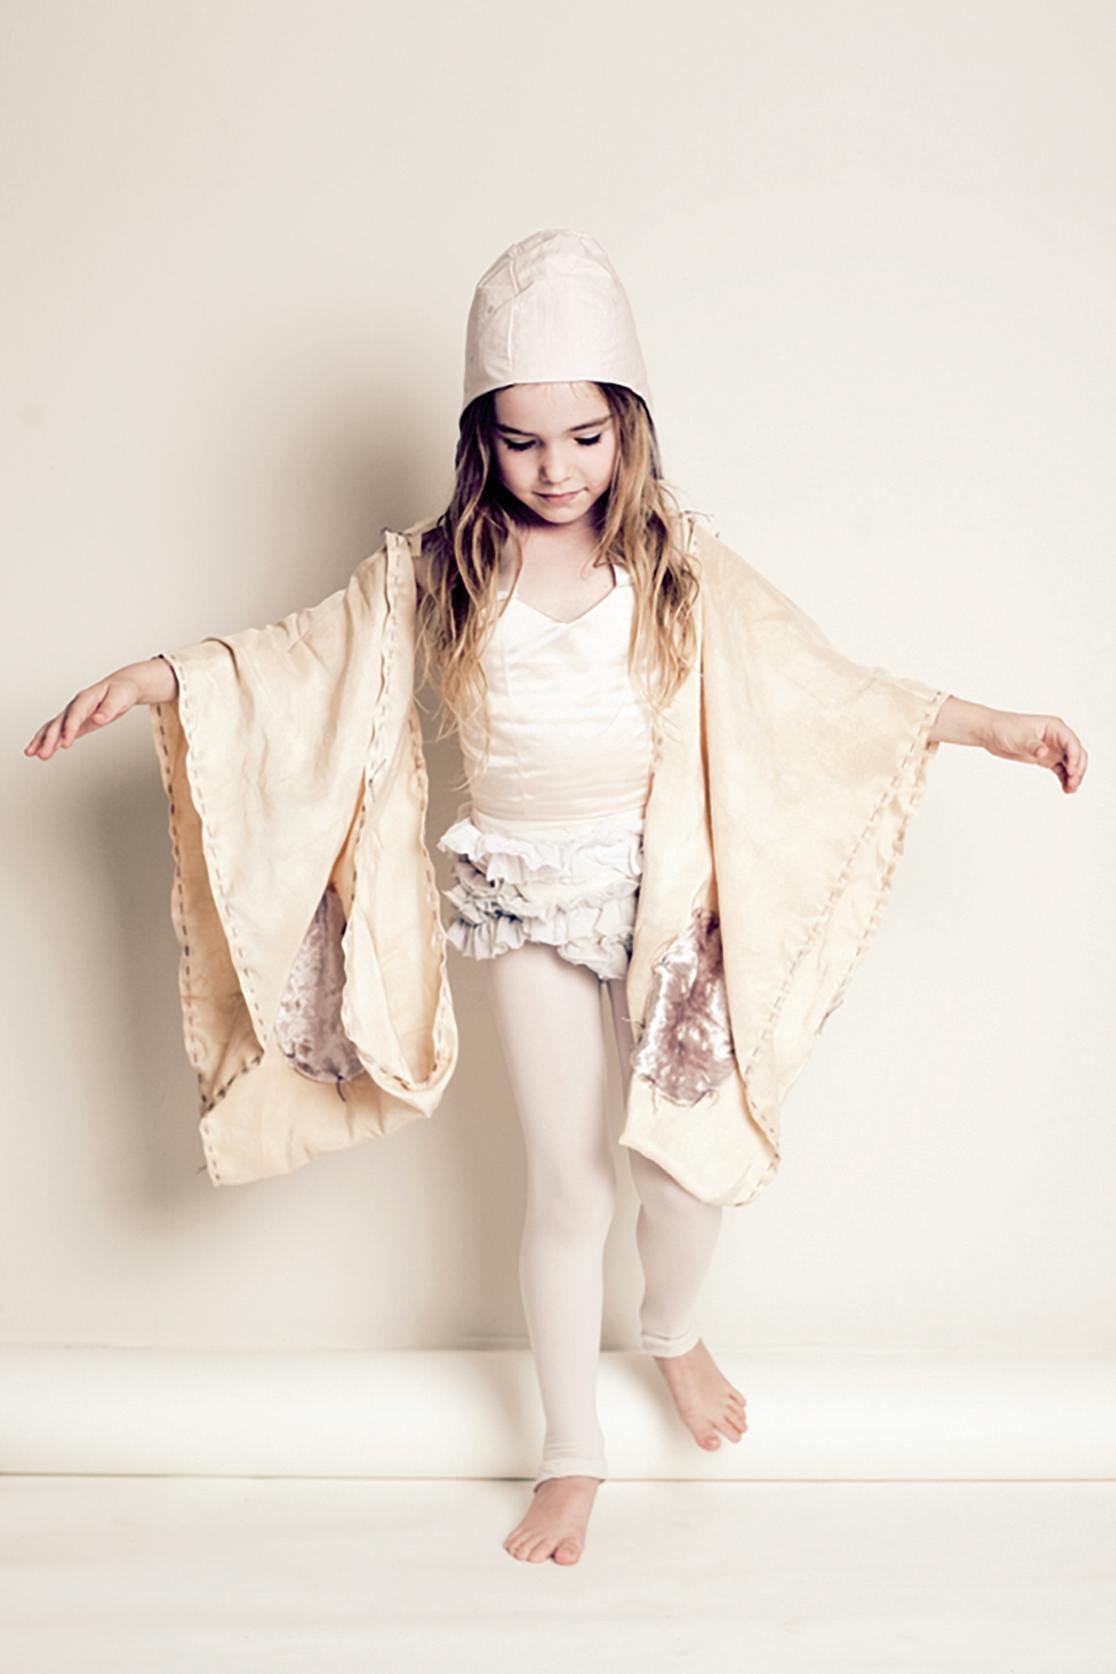 young model in dancing pose wearing tutu and hood